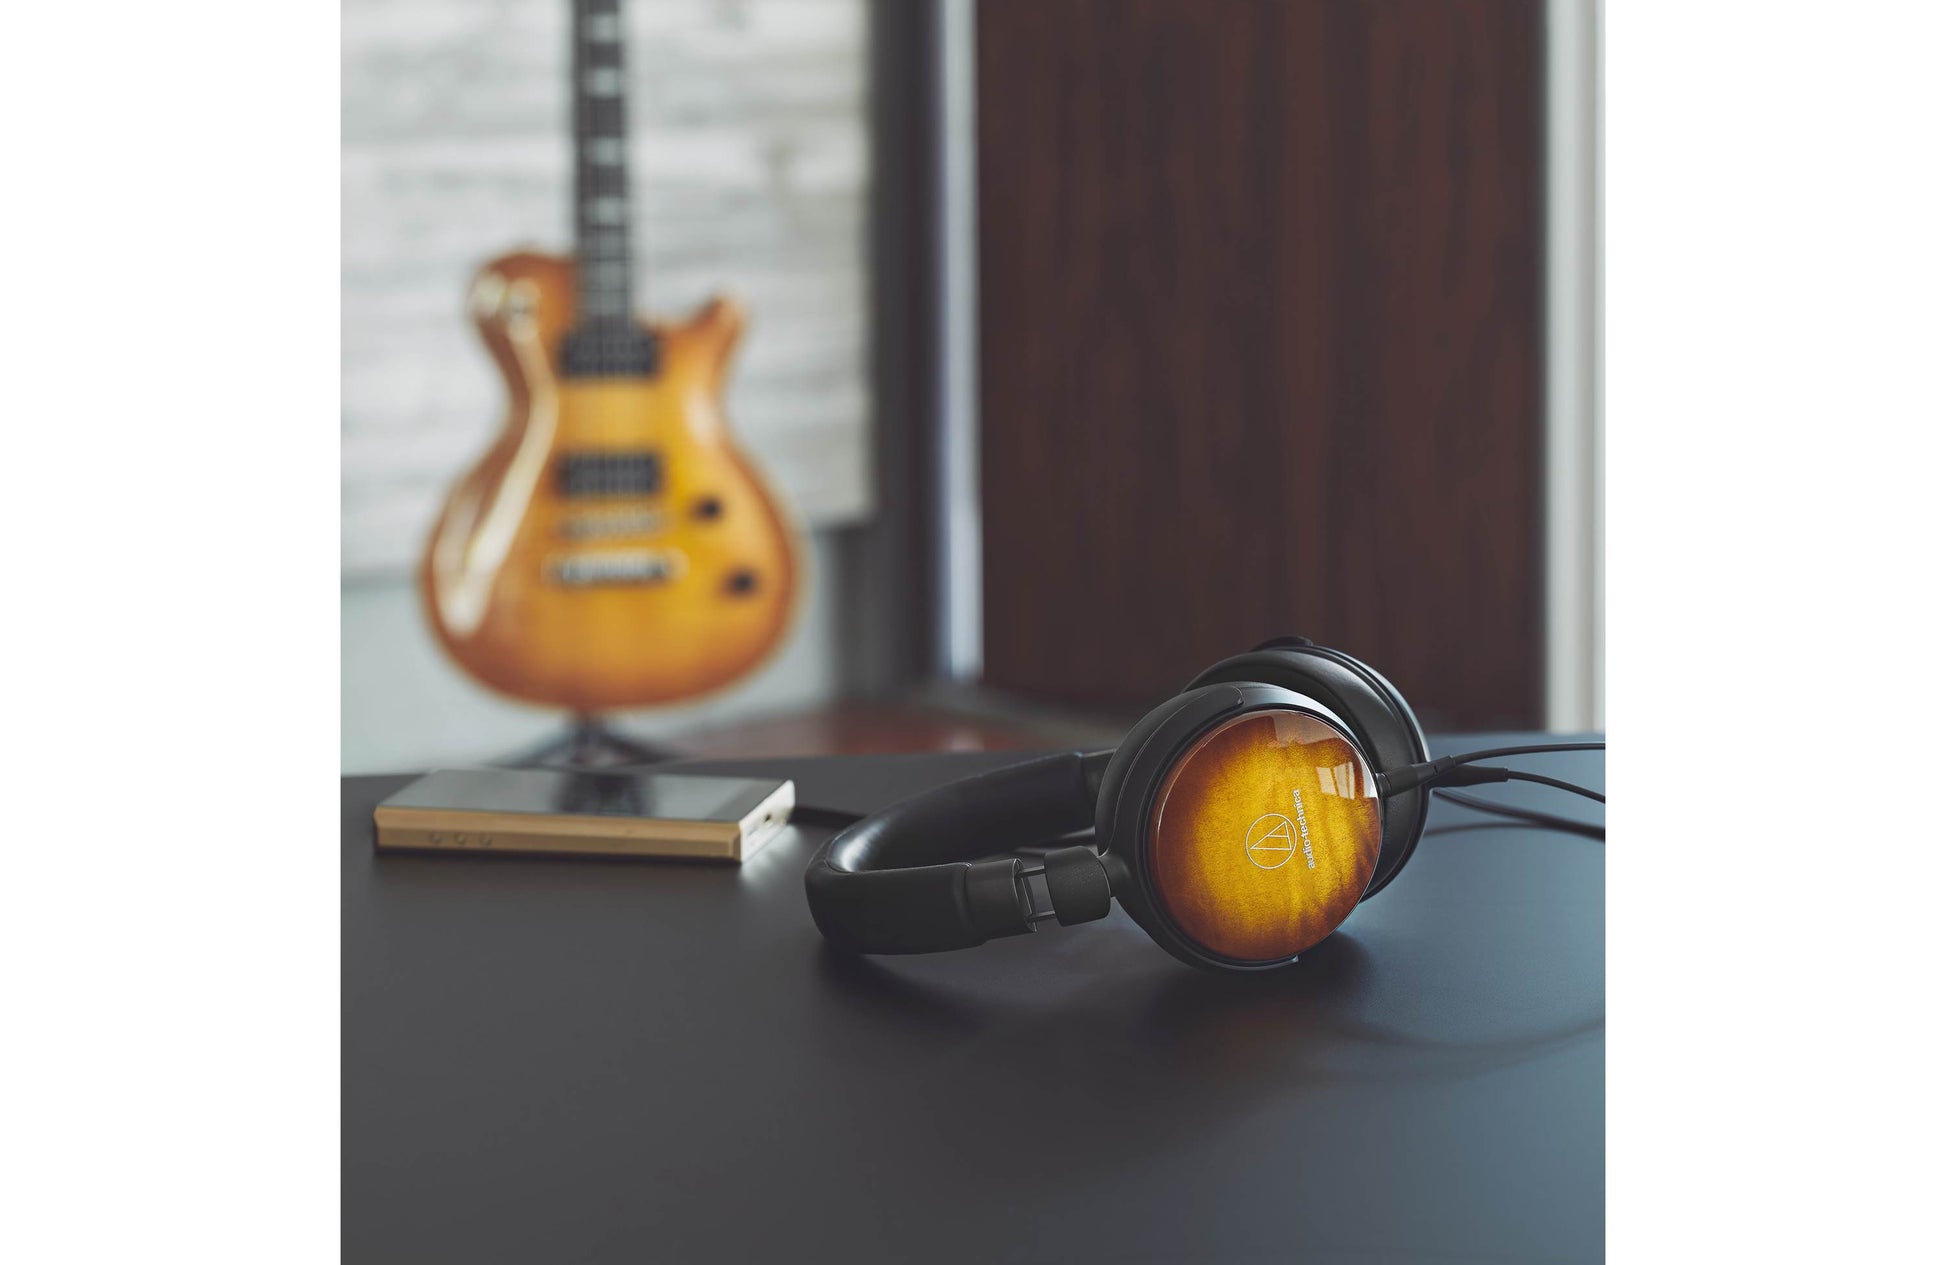 Audio-Technica ATH-WP900 Over-Ear Maple Wood Headphones